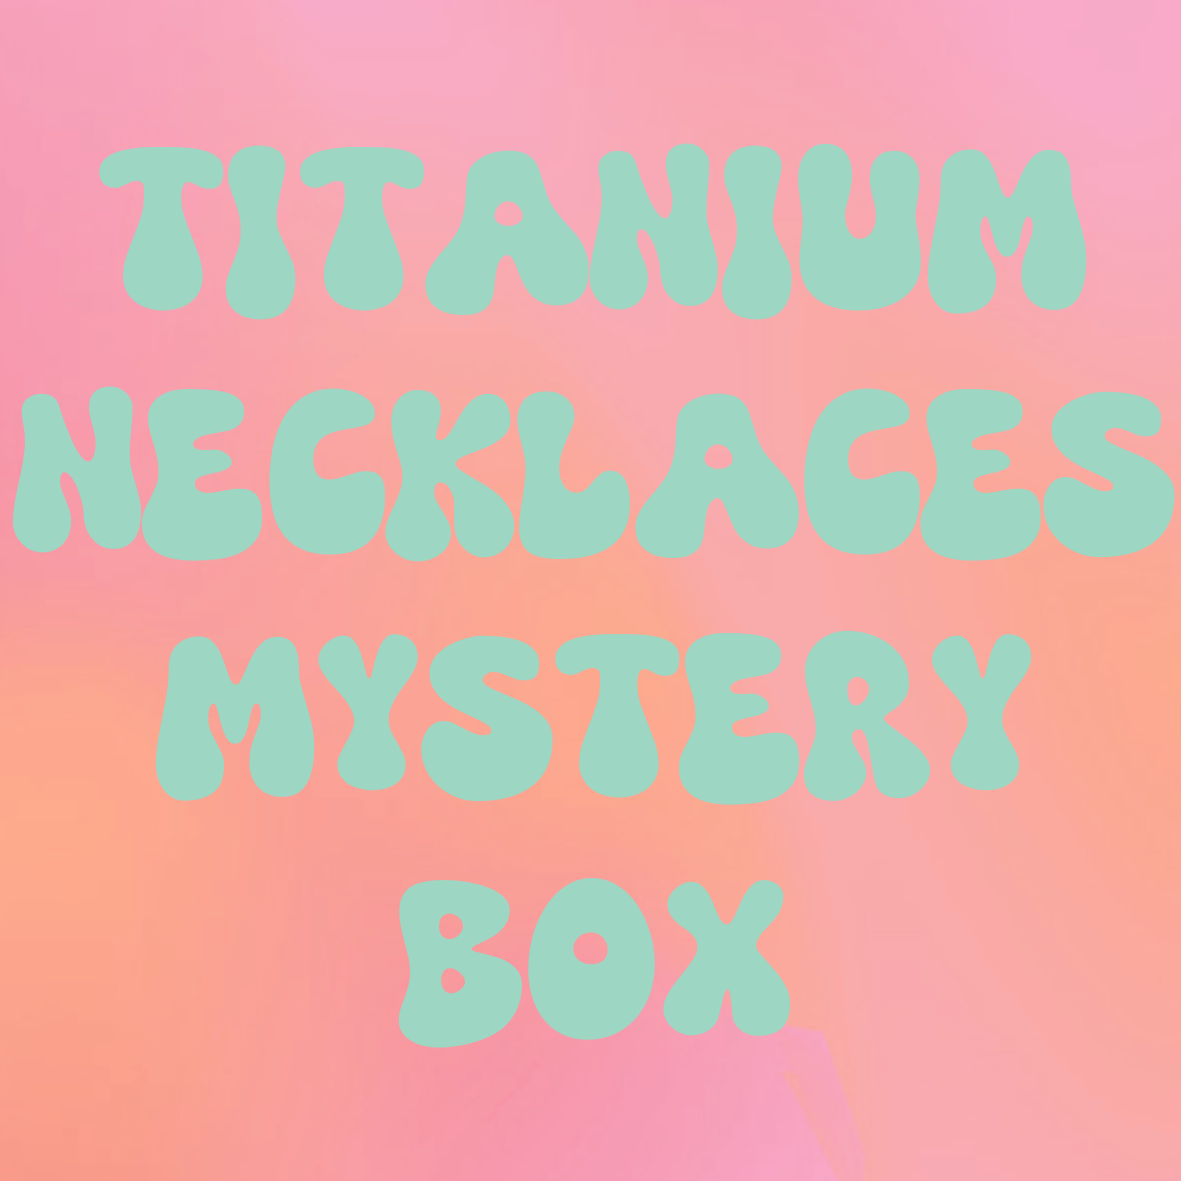 !Mystery Box Bundles!